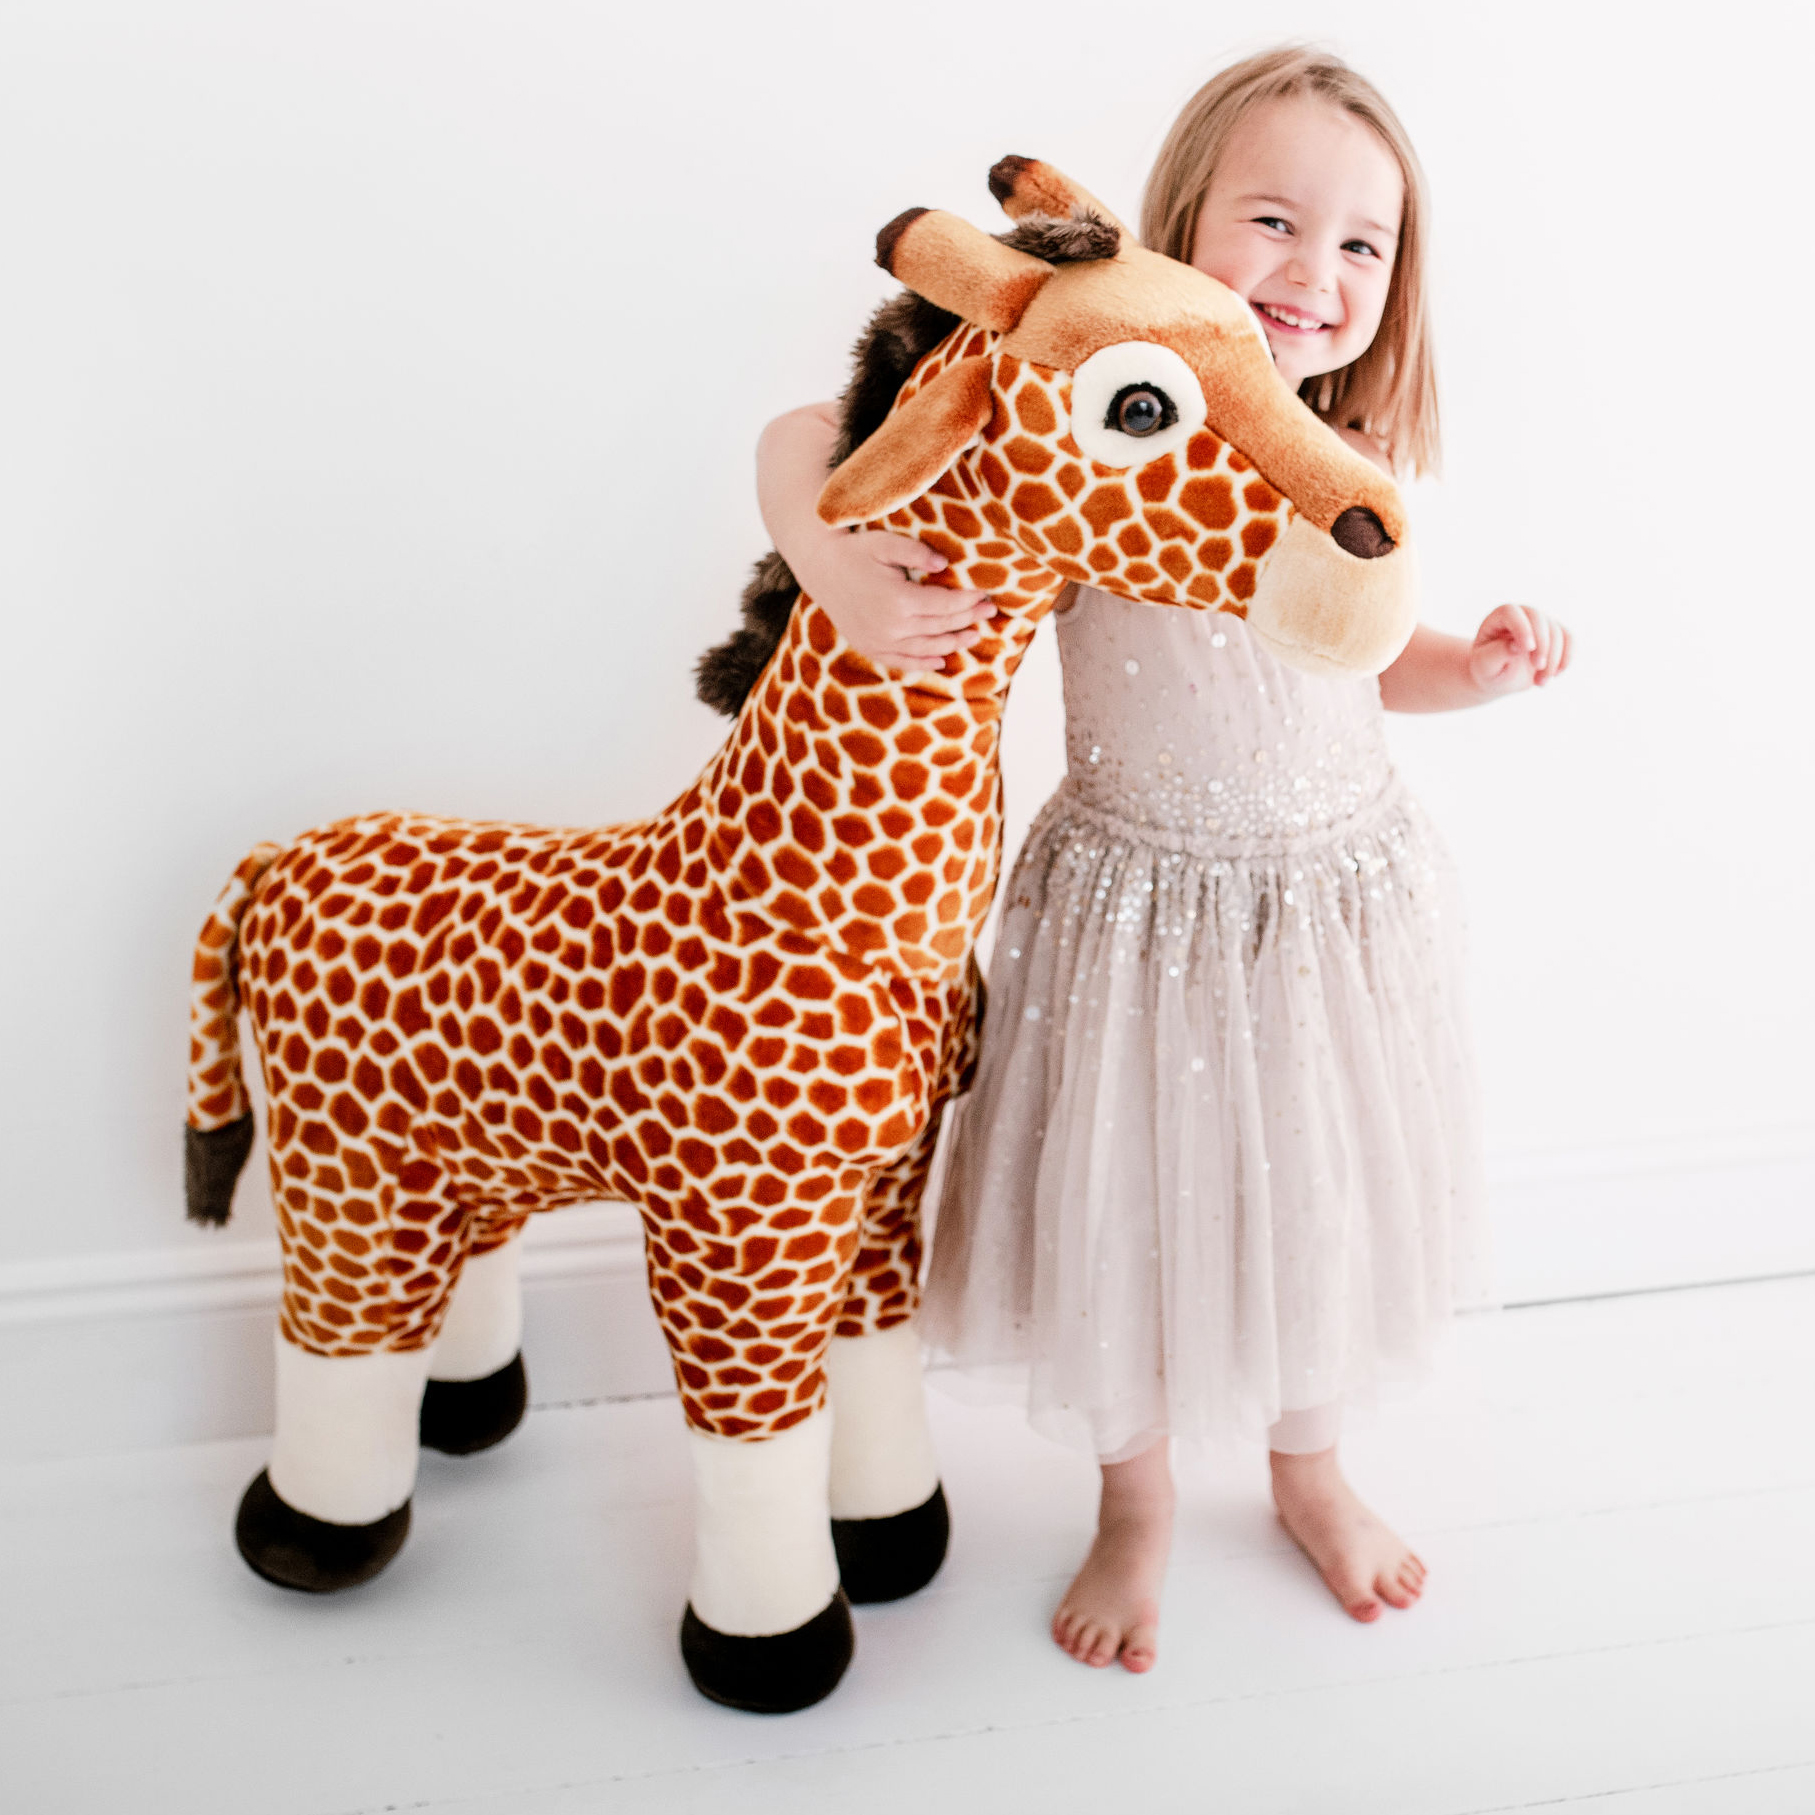 giant giraffe stuffed animal